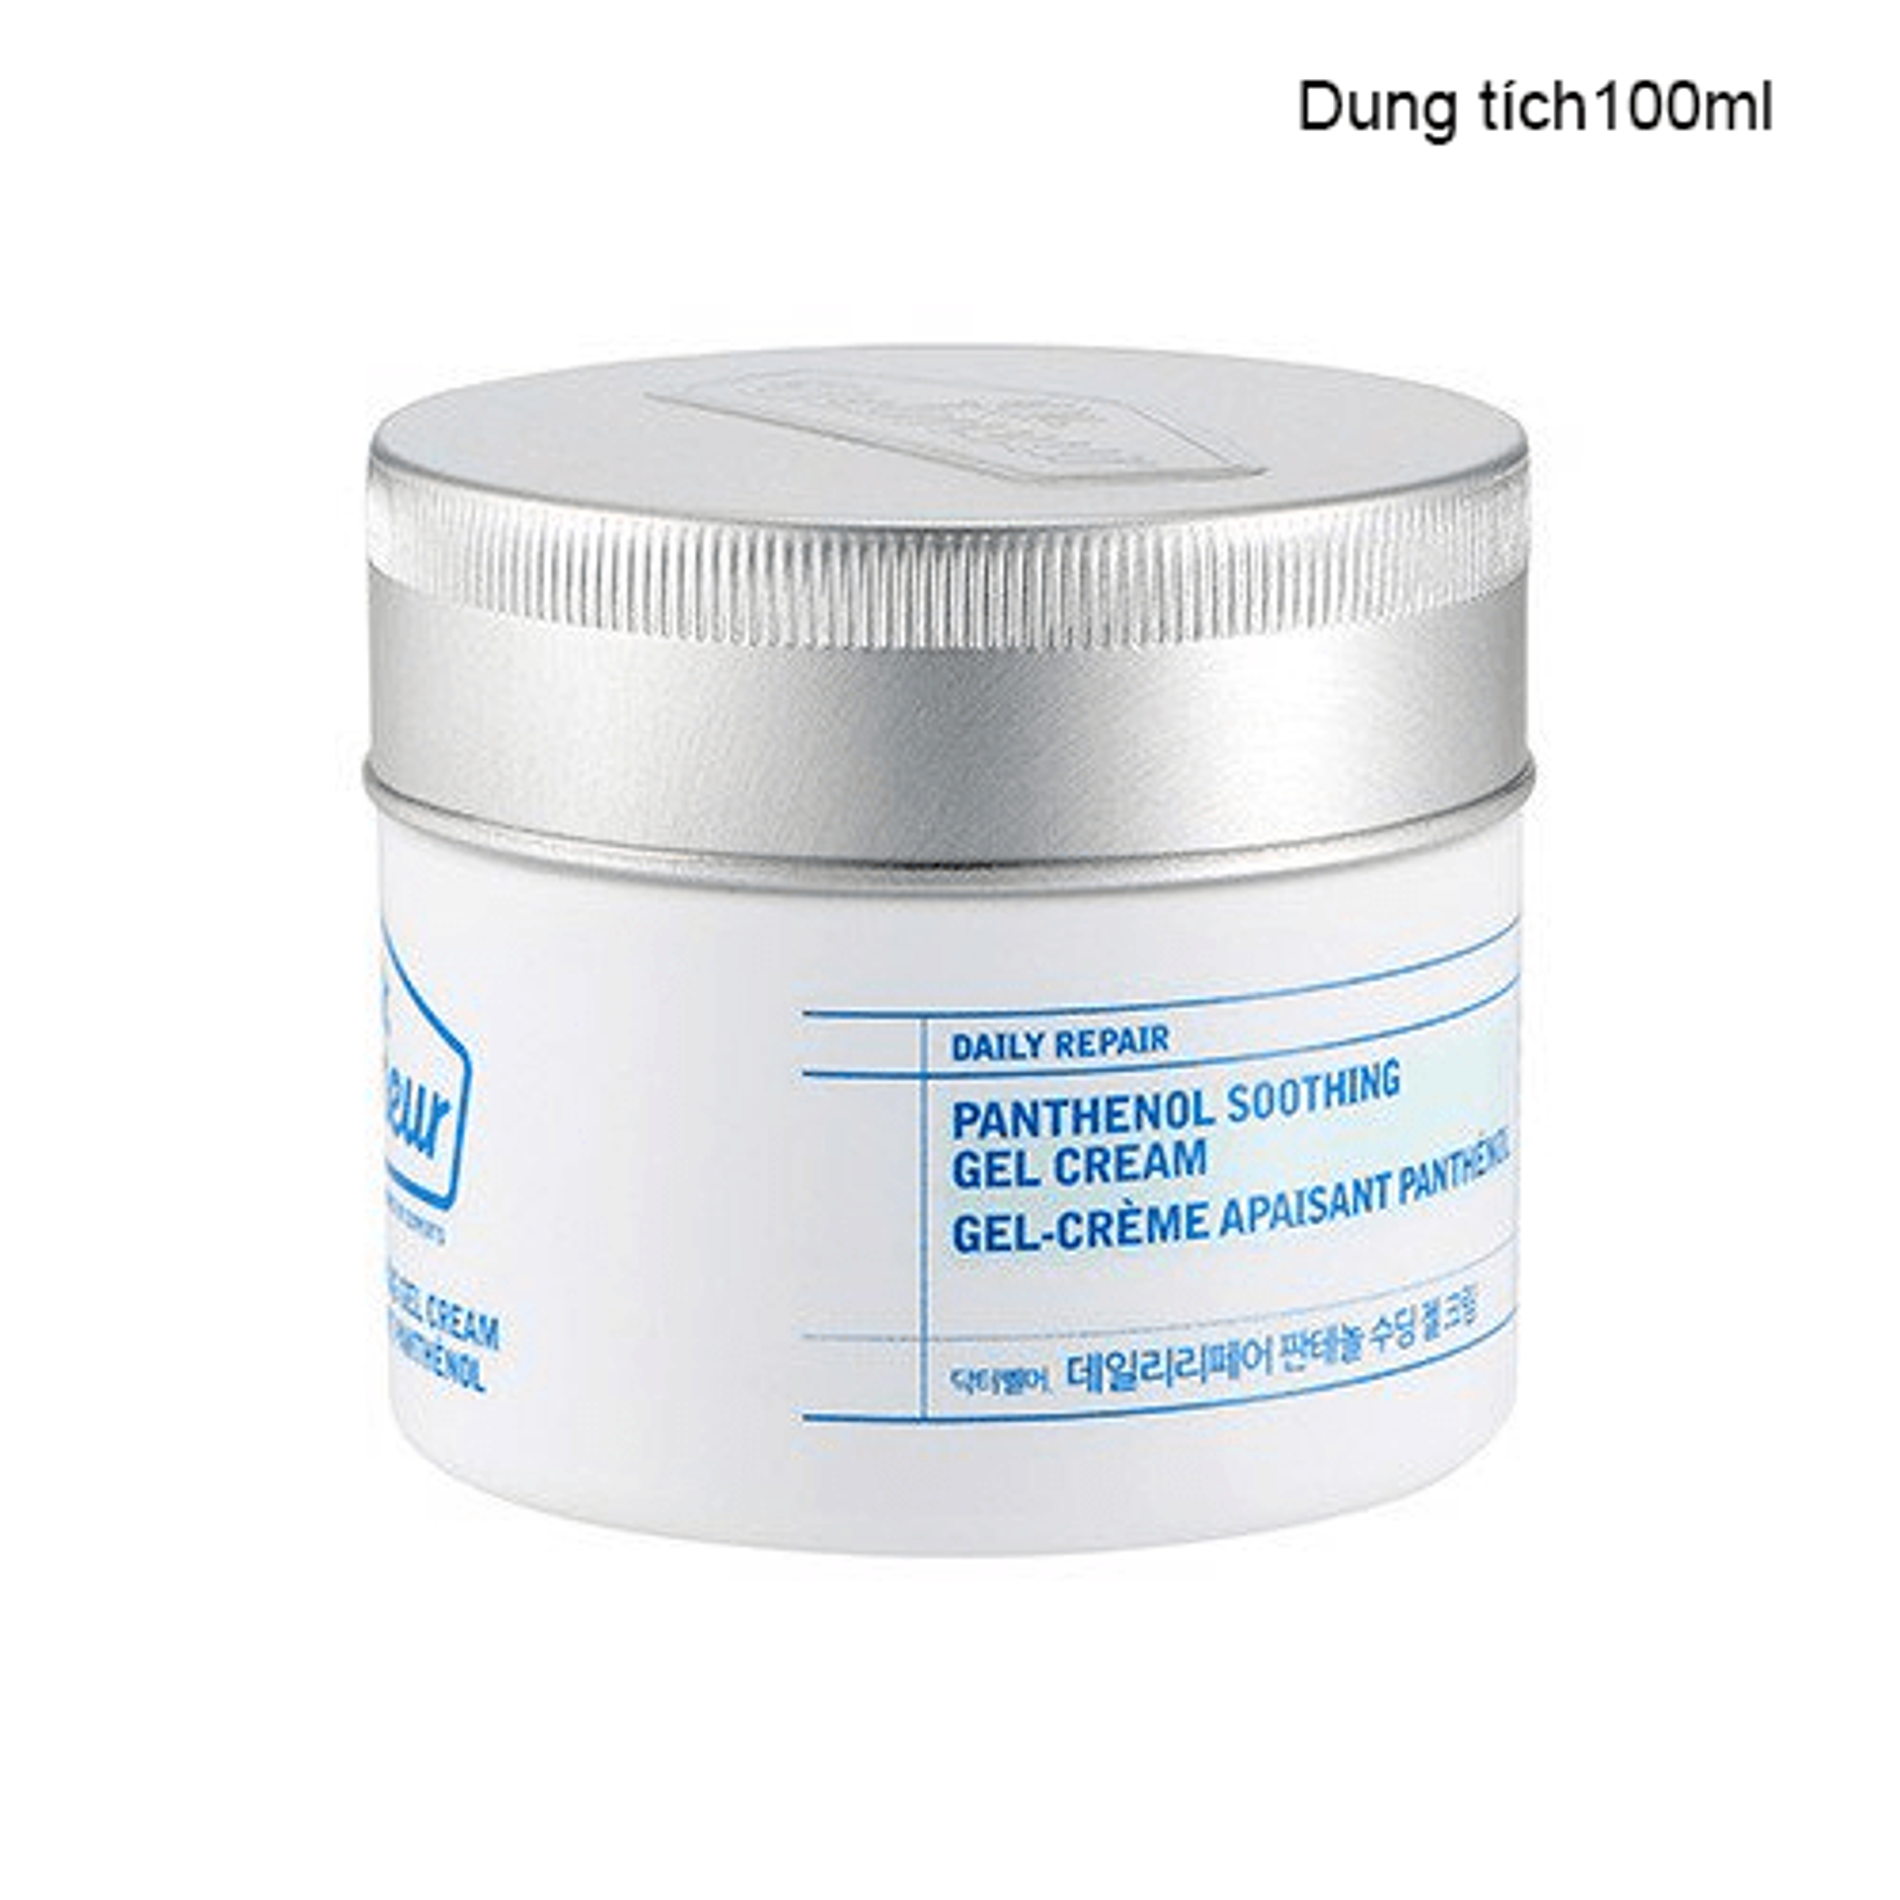 kem-duong-da-dr-belmeur-daily-repair-panthenol-soothing-gel-cream-3